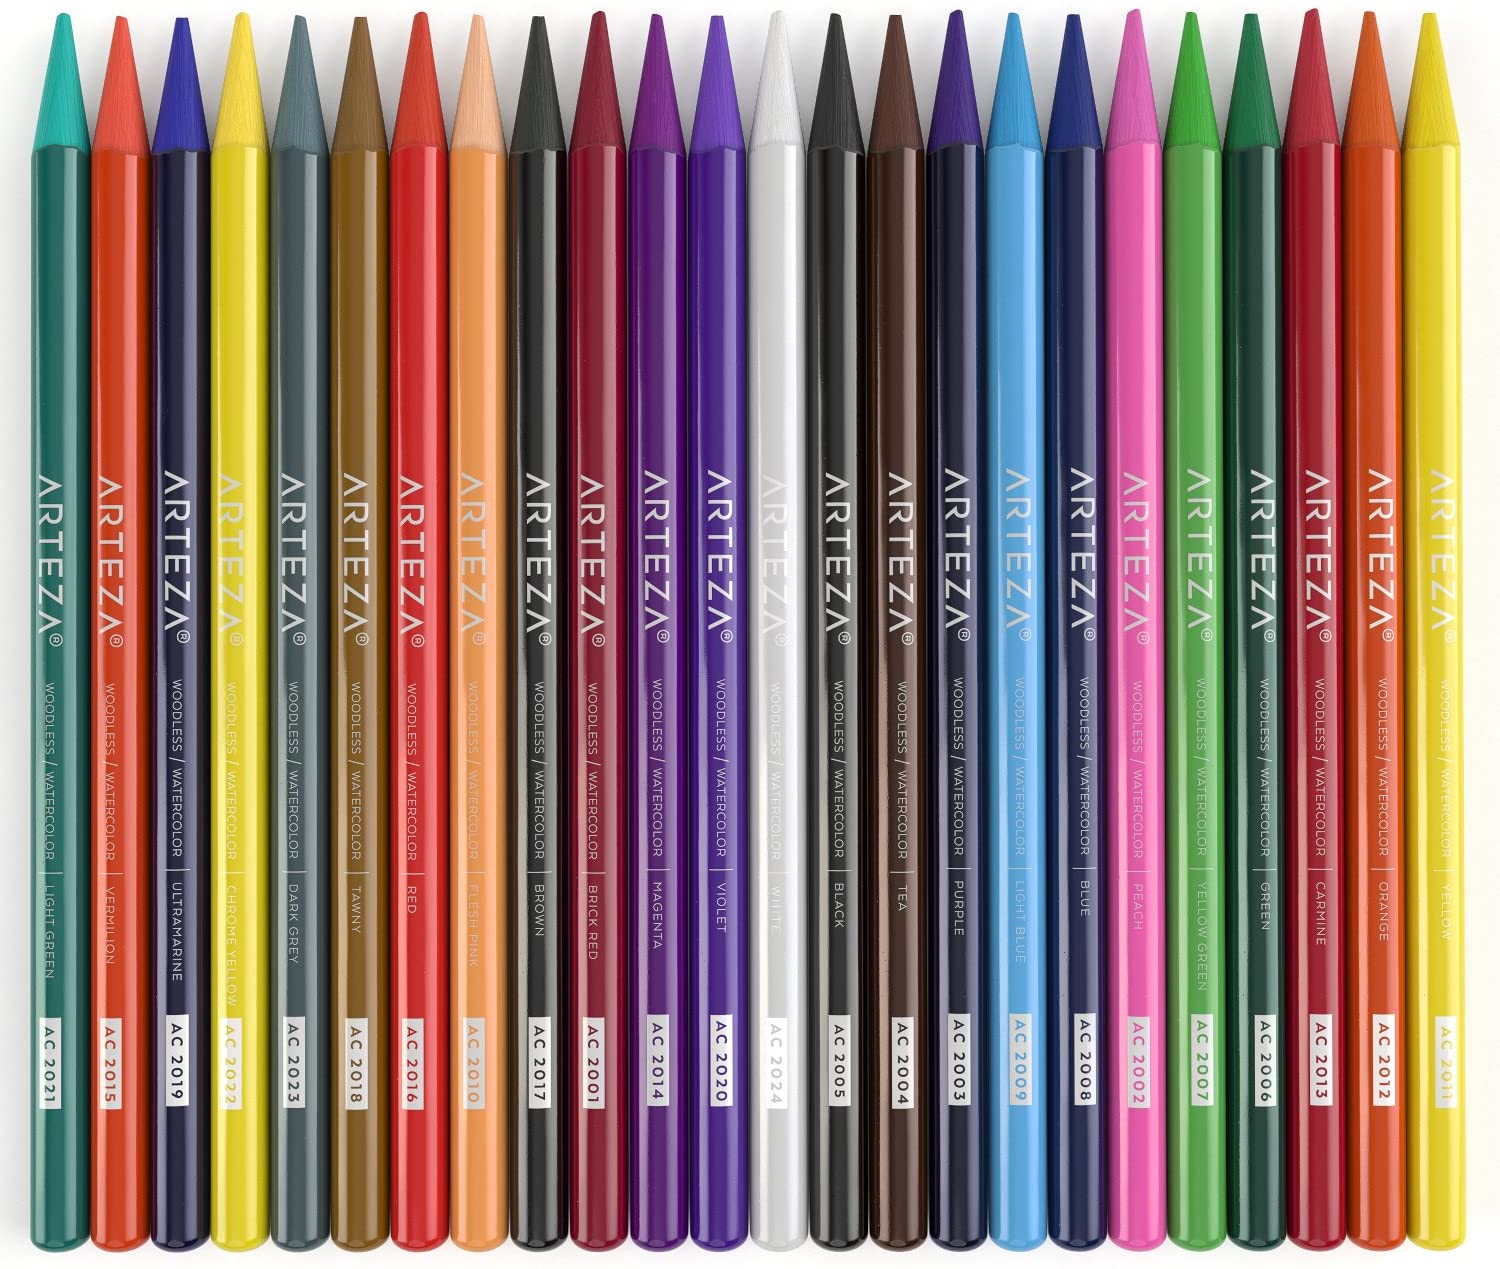 Arteza Woodless Watercolor Pencils (Set of 24)